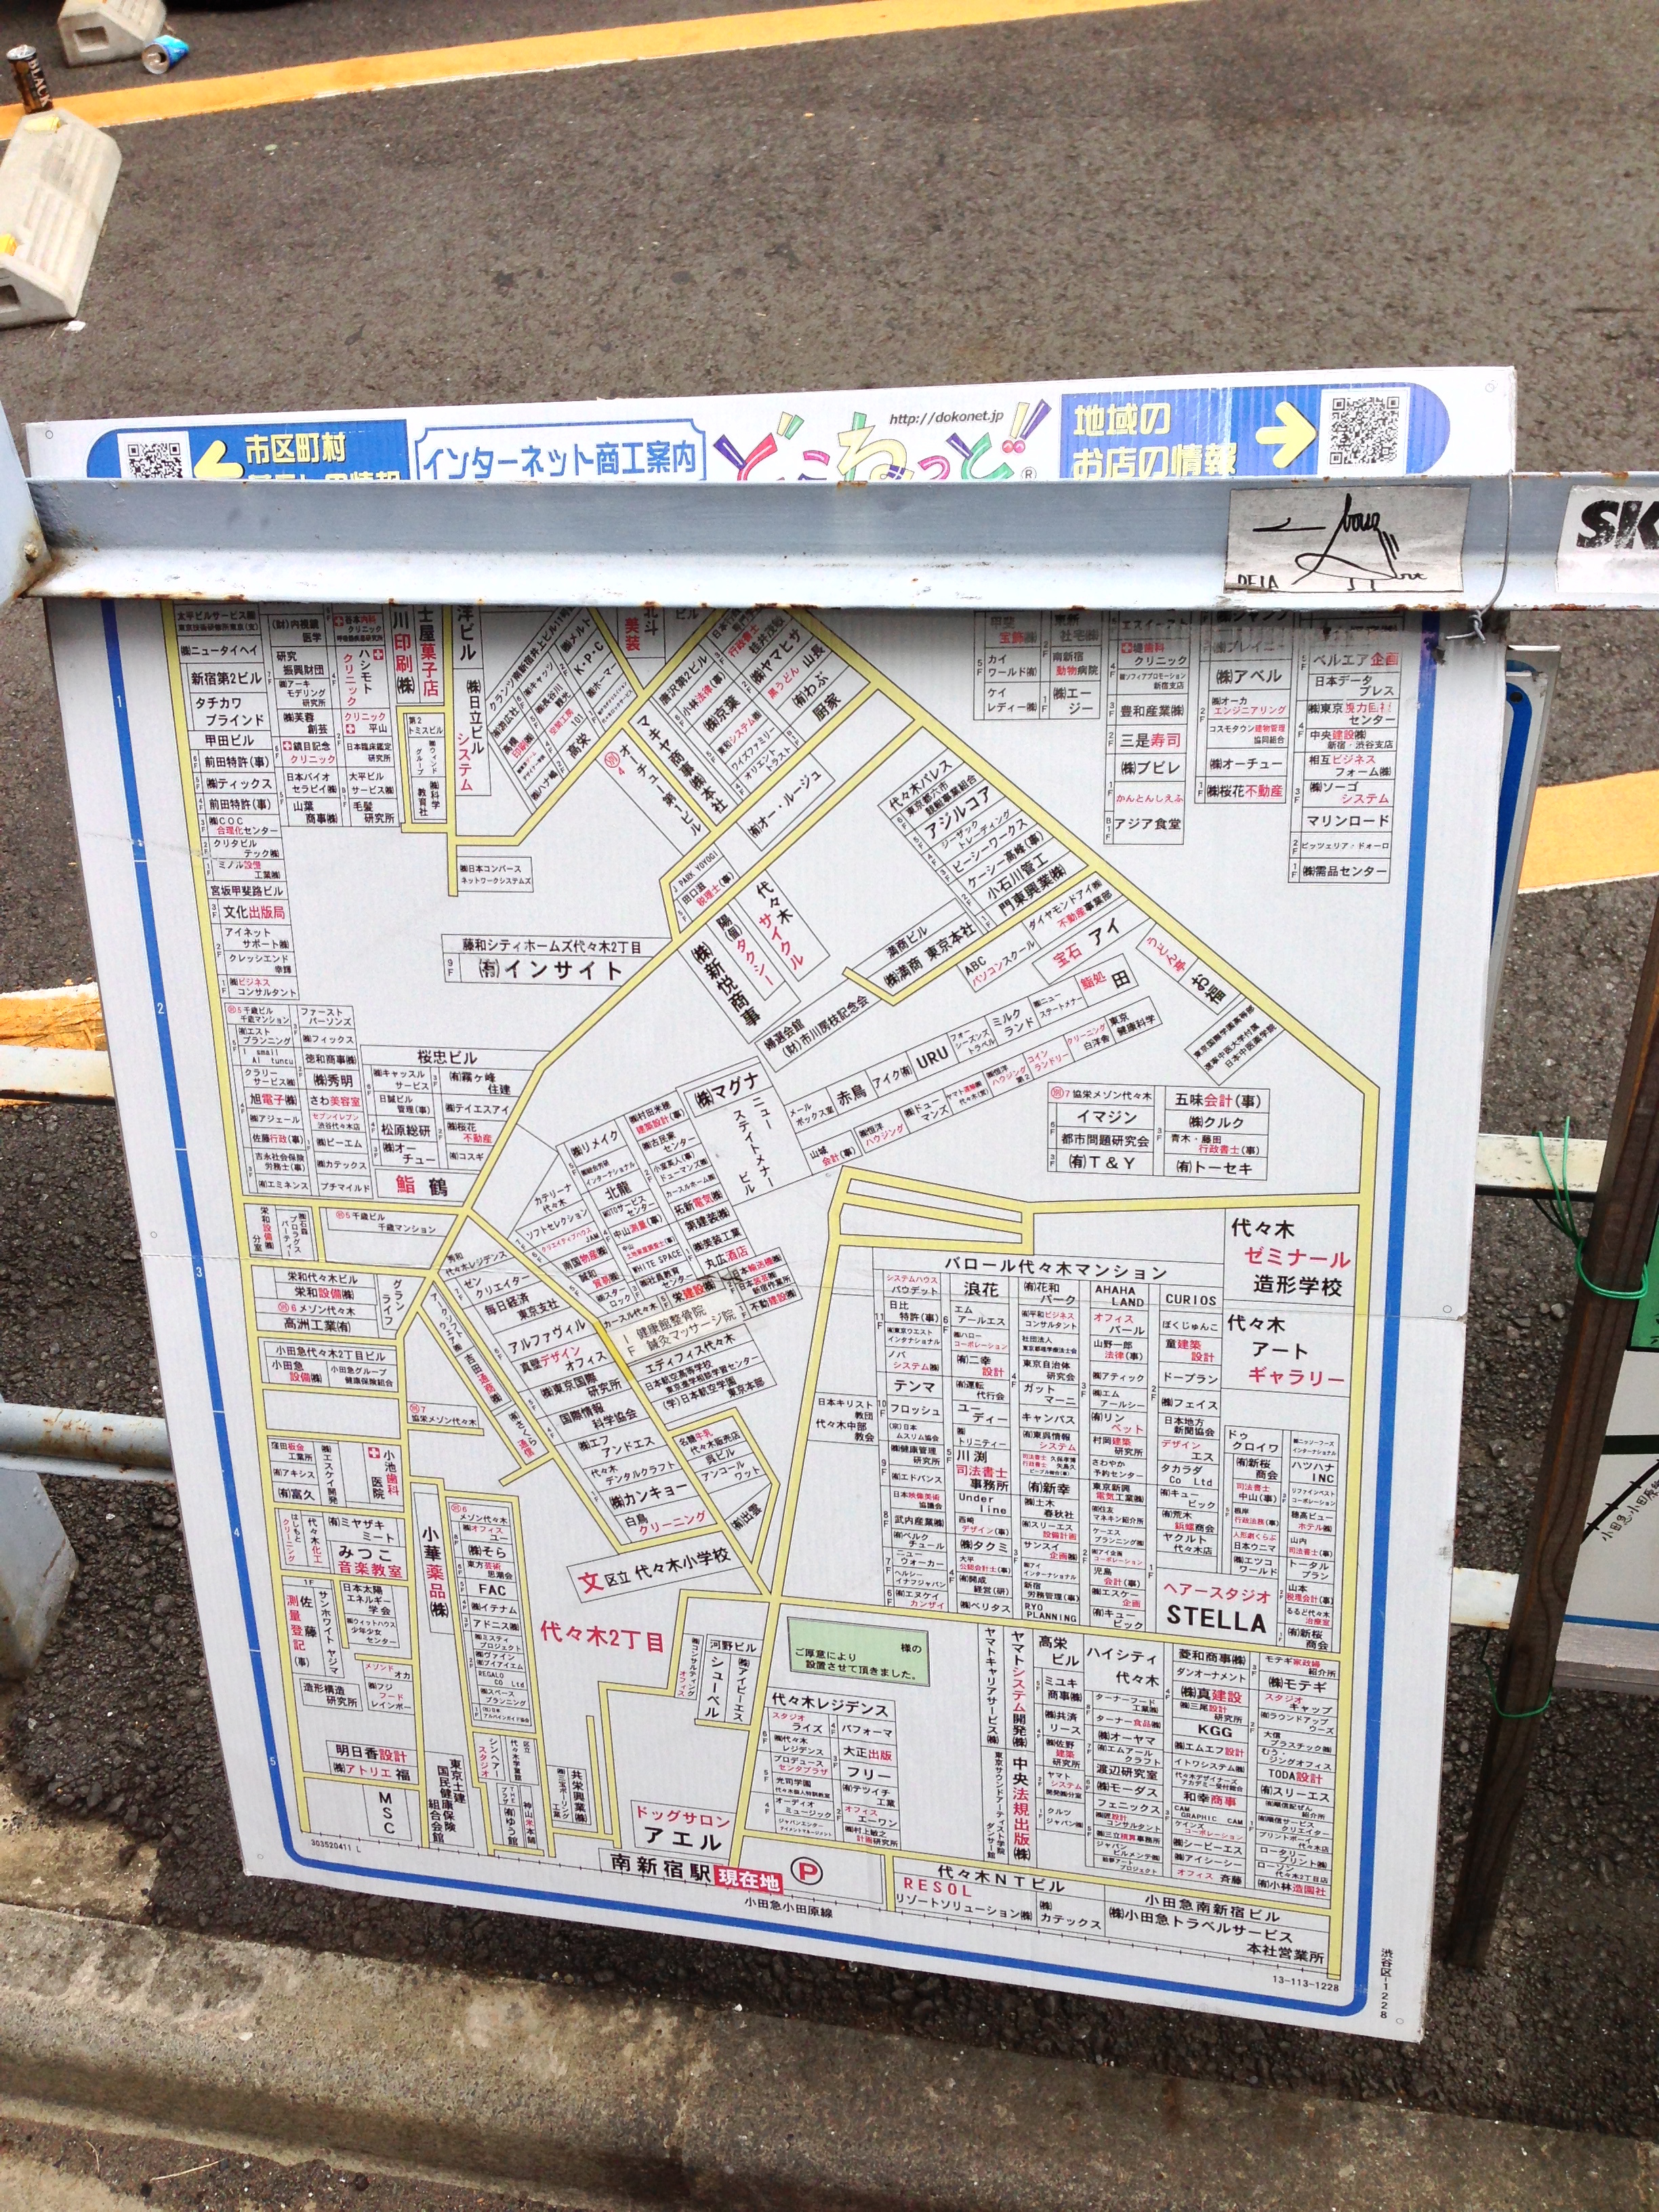 A zoomed-in neighbourhood map.